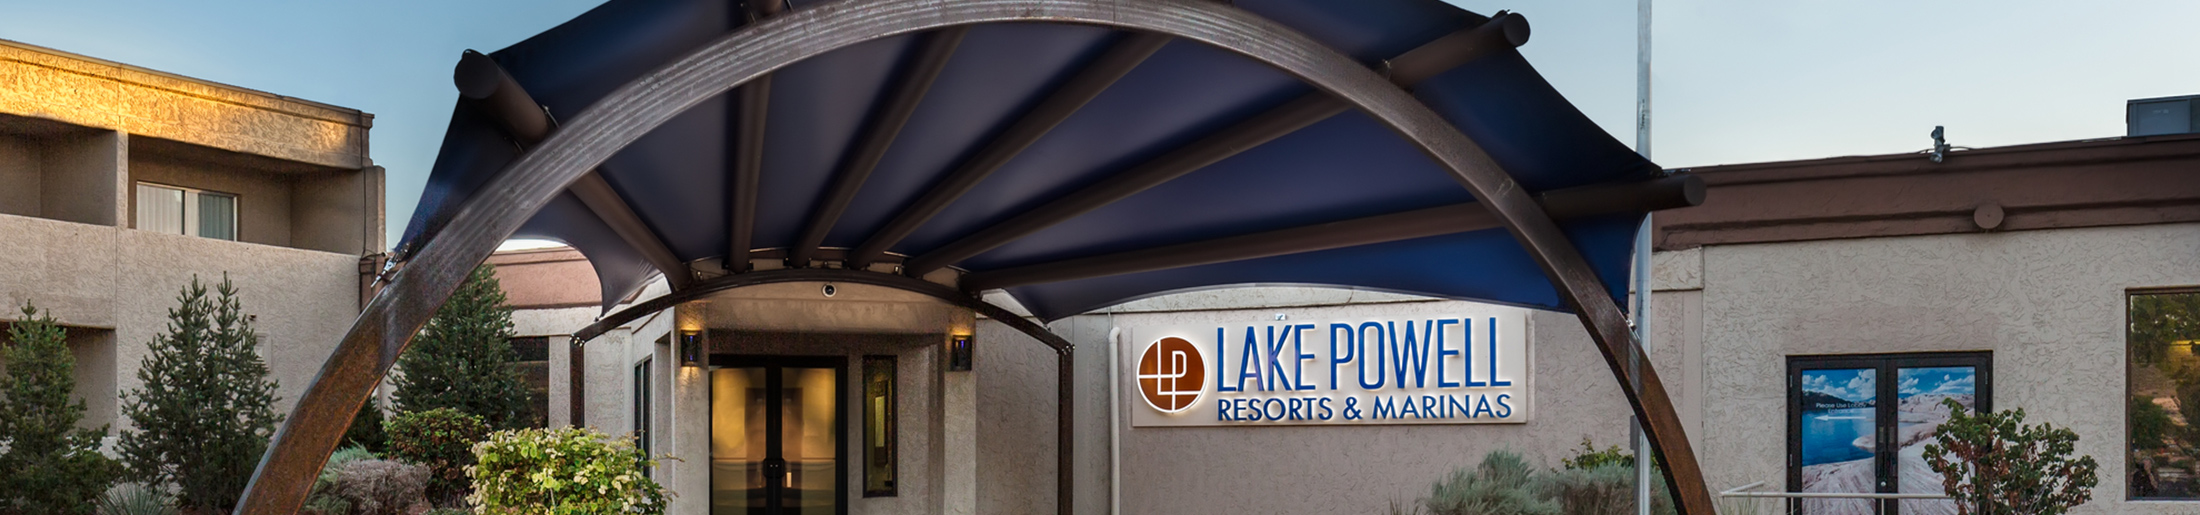 Lake Powell Resort Entrance